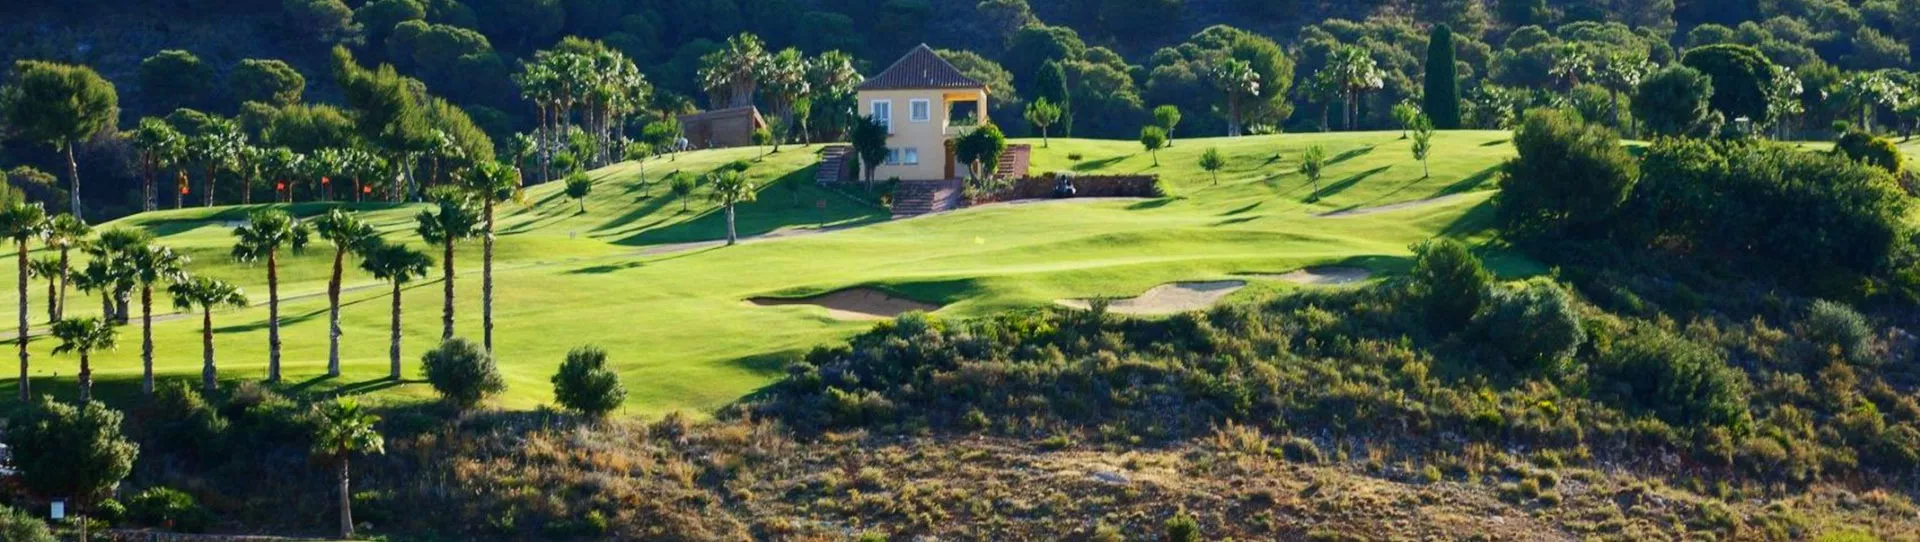 Spain golf courses - Alhaurin Golf Resort - Photo 3